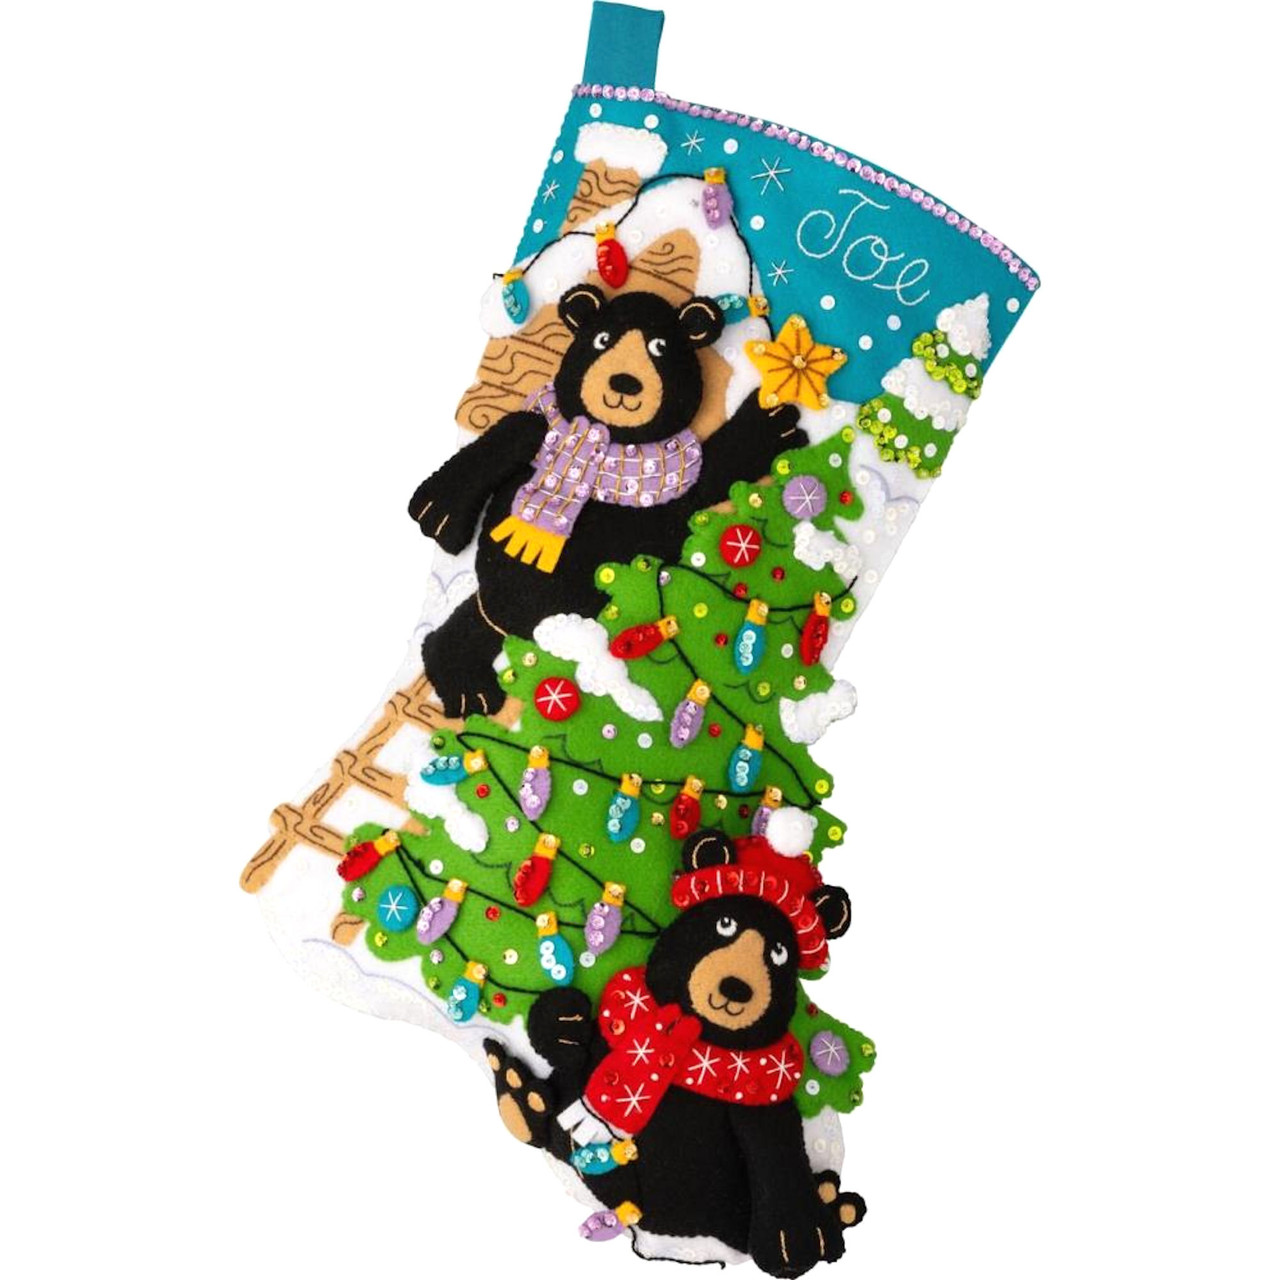 Plaid / Bucilla - Holiday Black Bears Stocking - CrossStitchWorld